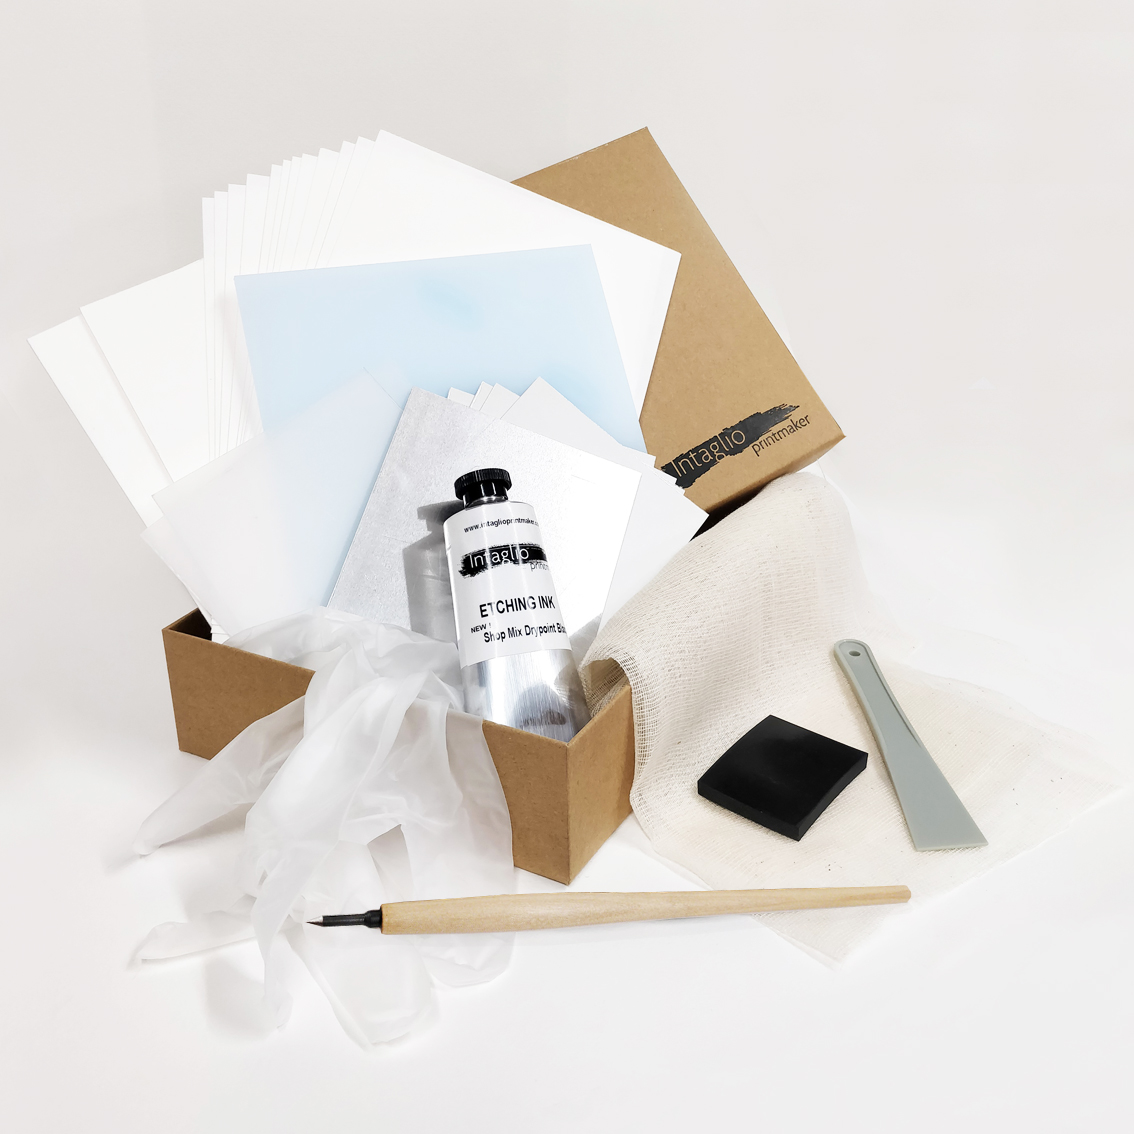 Relief Printing Kits Archives - Intaglio Printmaker